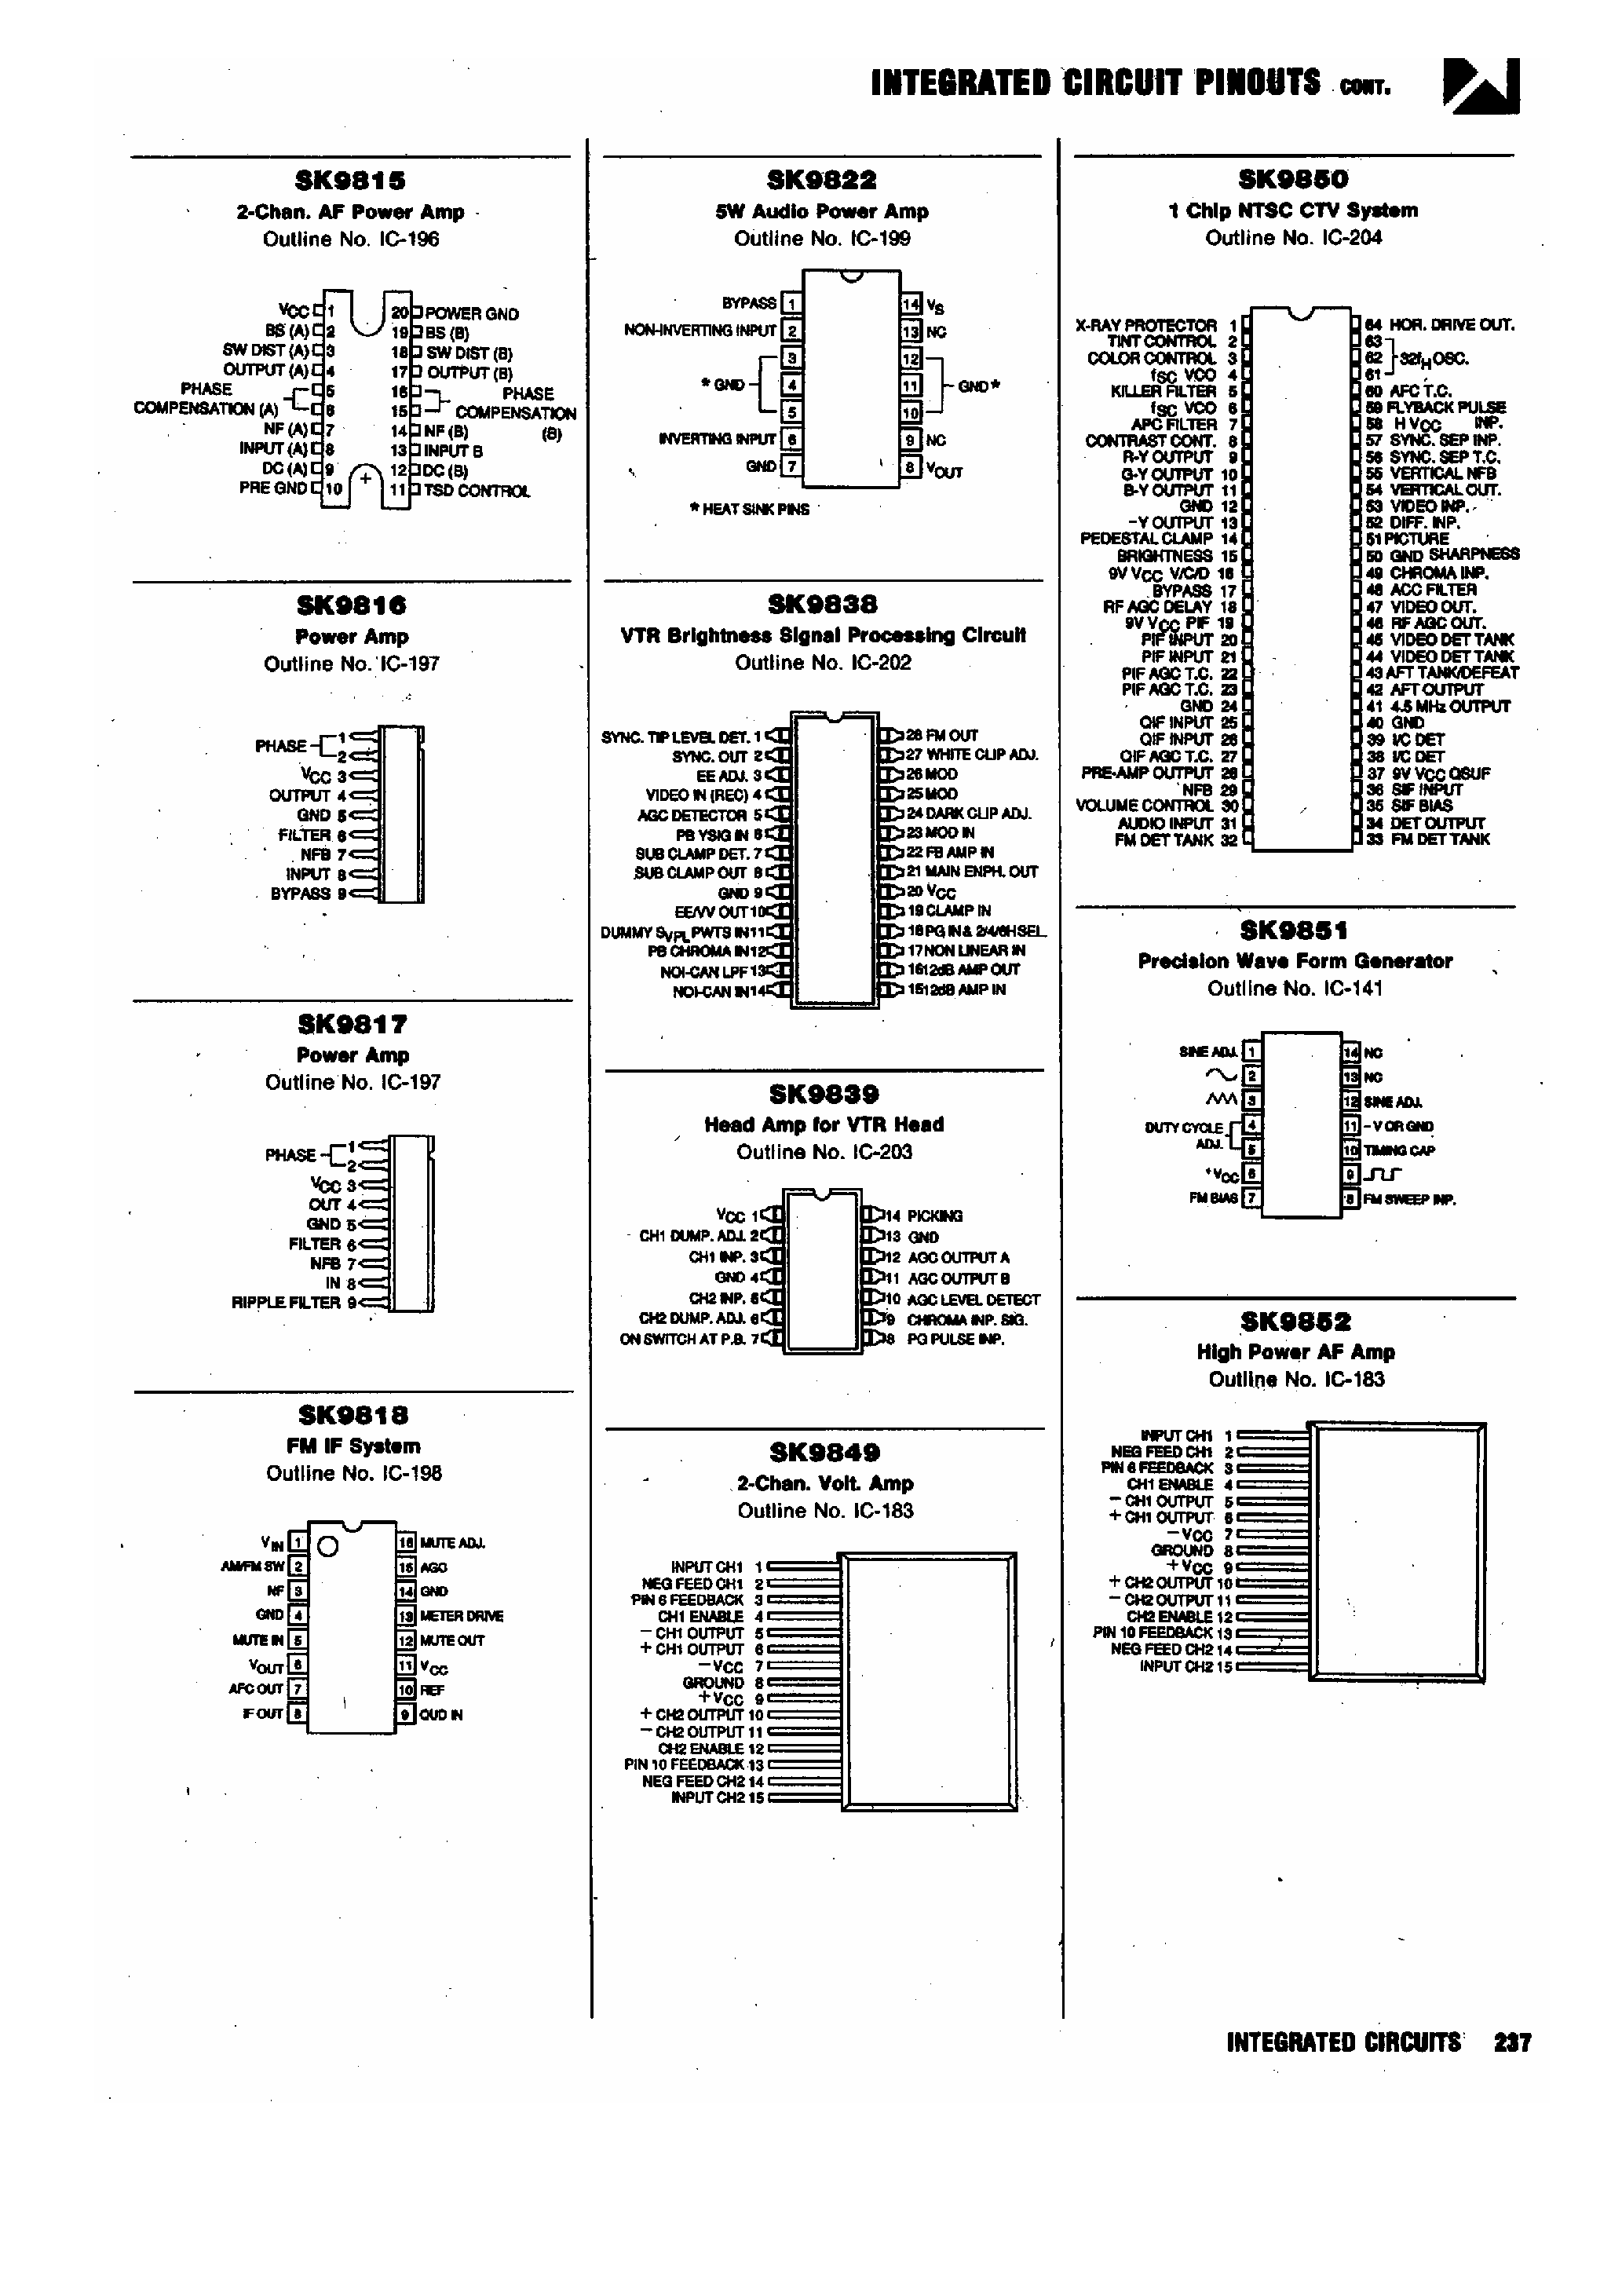 Datasheet SK9850 - 1 Chip NTSC CTV System page 1